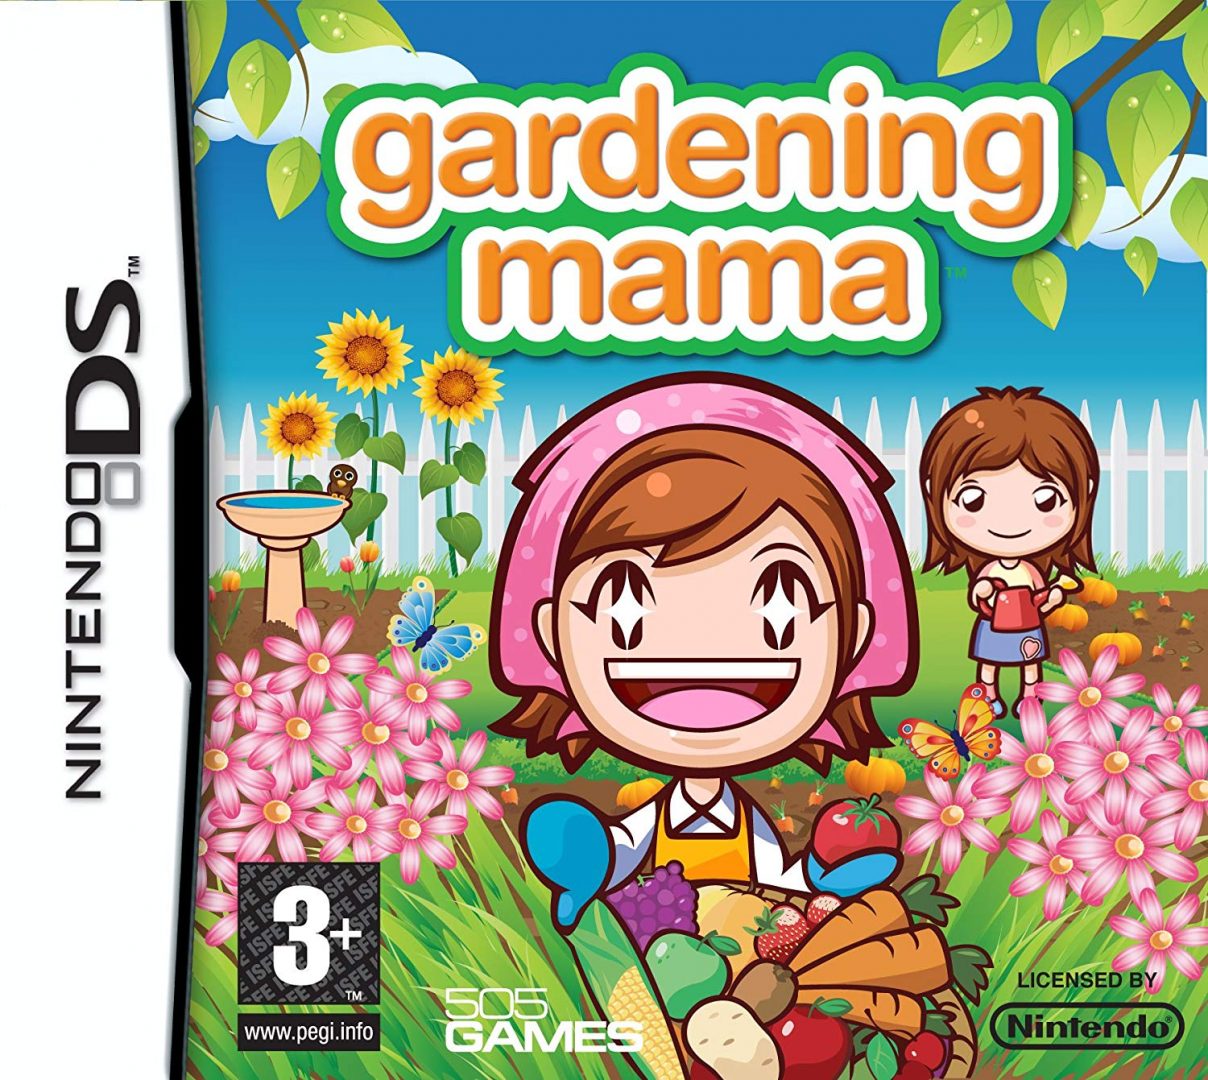 The coverart image of Gardening Mama